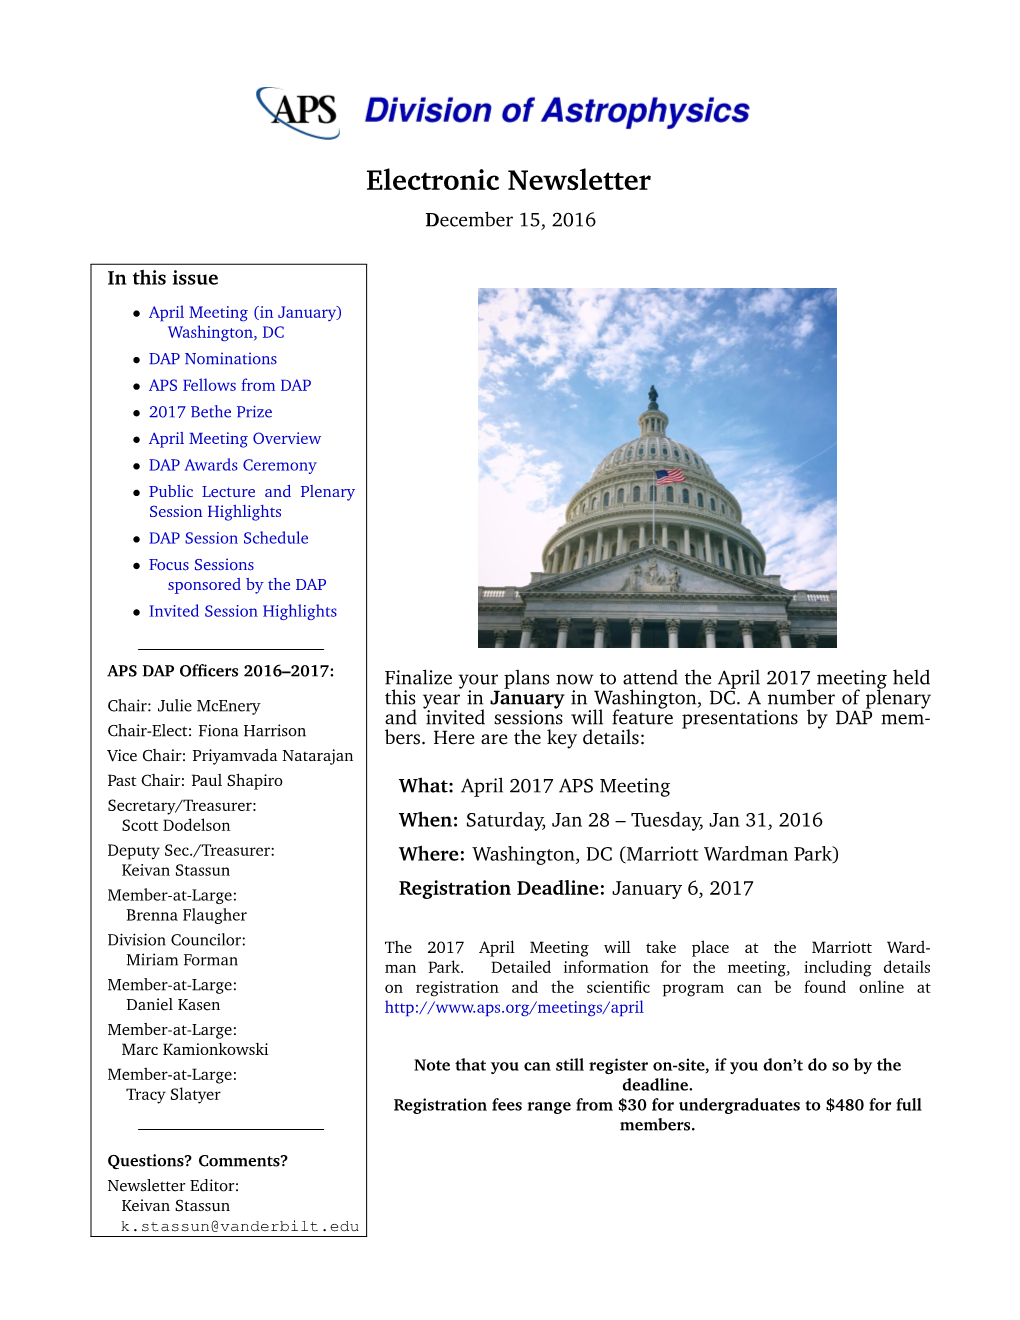 Electronic Newsletter December 15, 2016